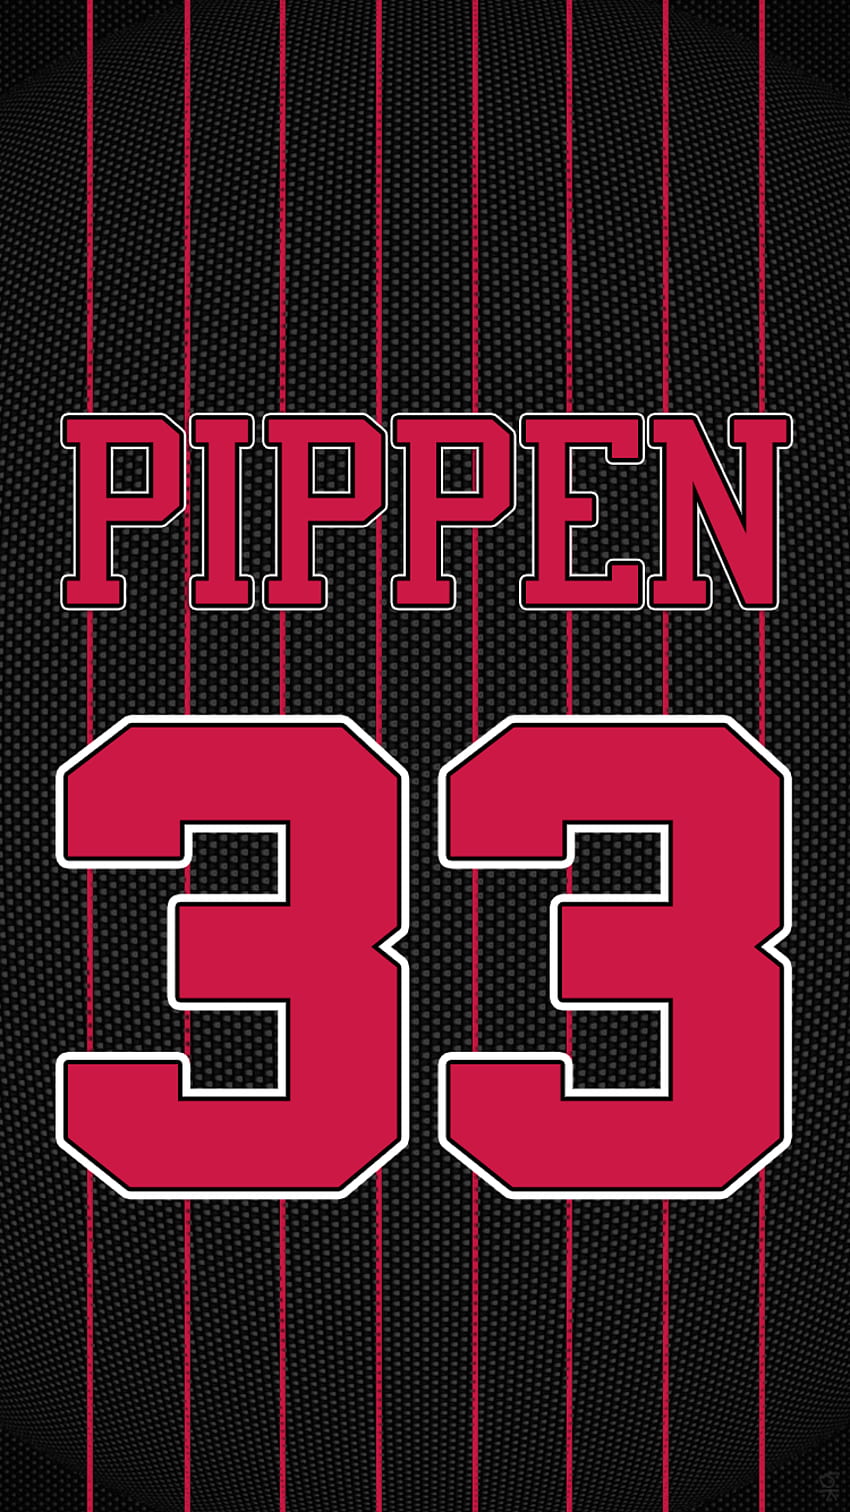 Chicago Bulls Pippen Png.613147 750×1,334 Piksel. Chicago Bulls, Scottie Pippen wallpaper ponsel HD